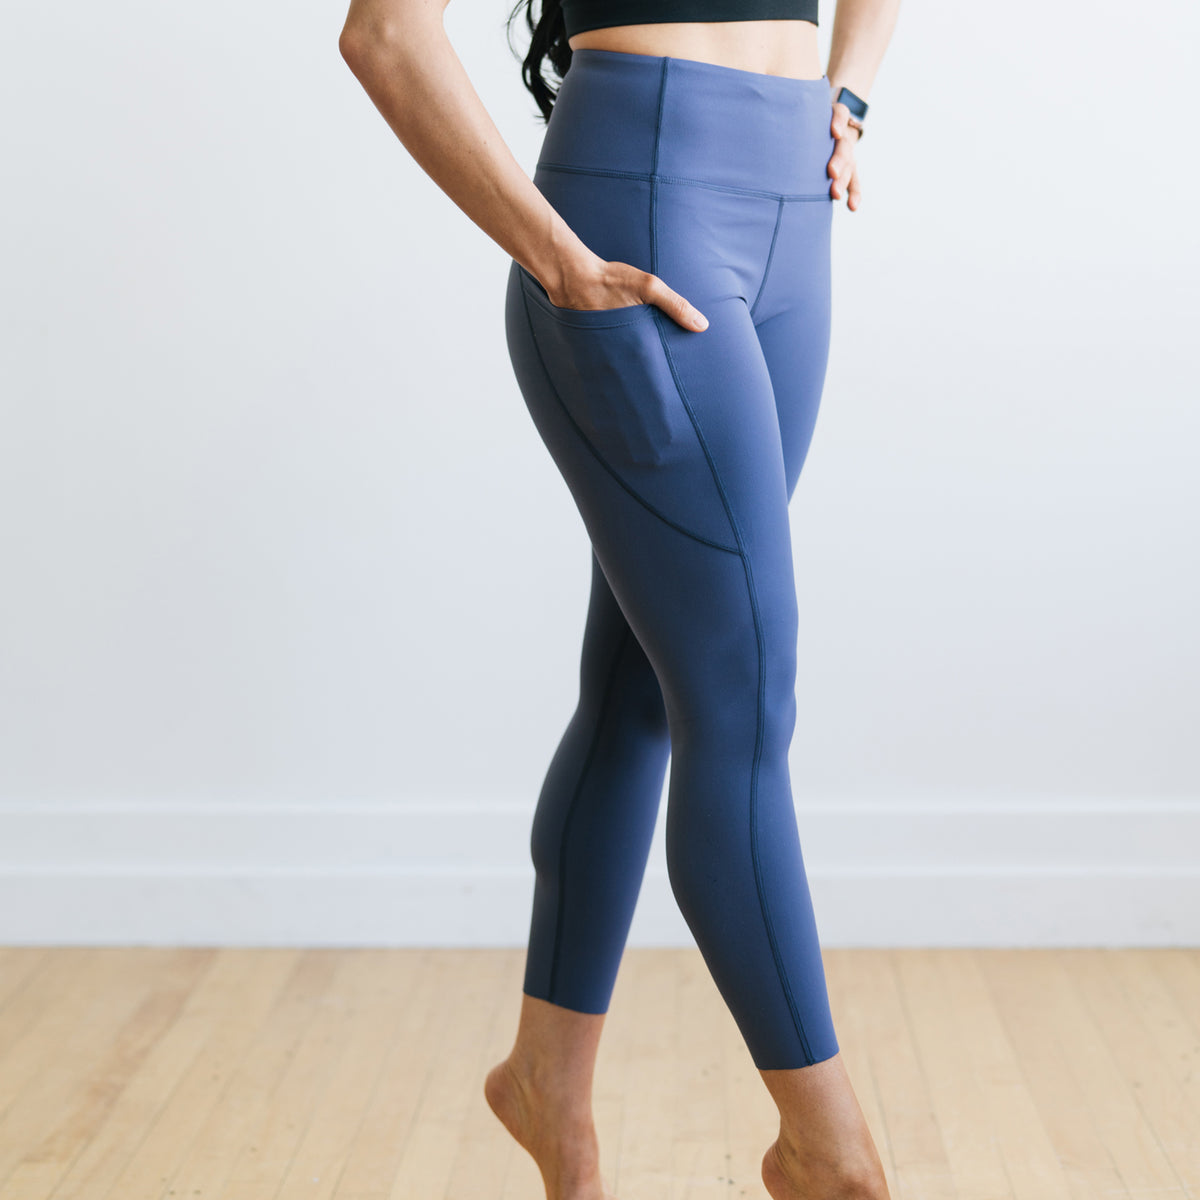 Blue Indigo Moon Leggings Women Yoga Pants, Second Skin Tights